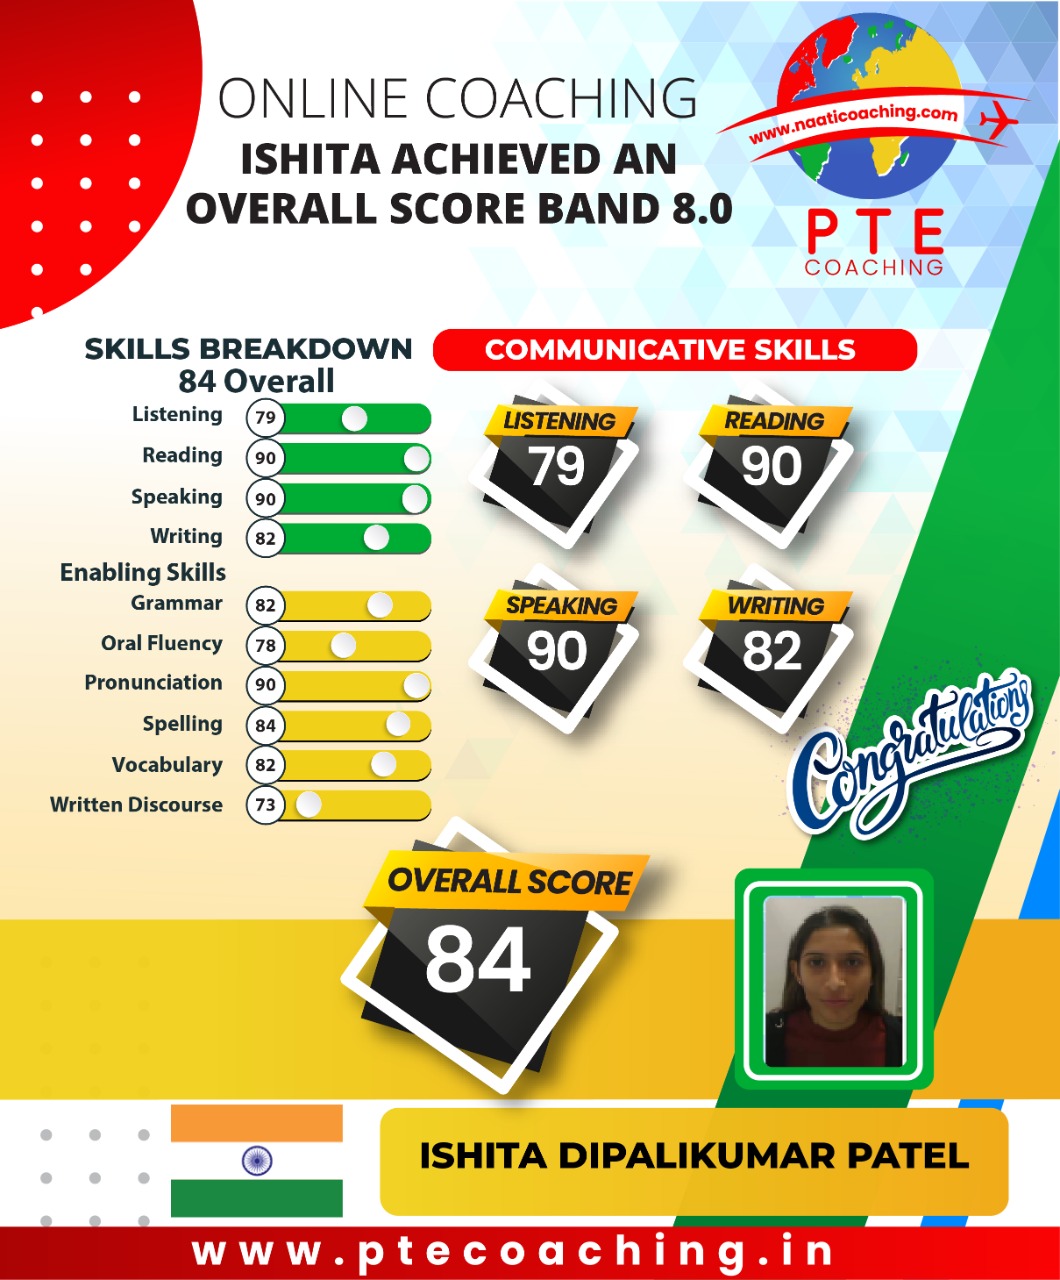 PTE Coaching Scorecard - Ishita achieved an overall score band 8.0